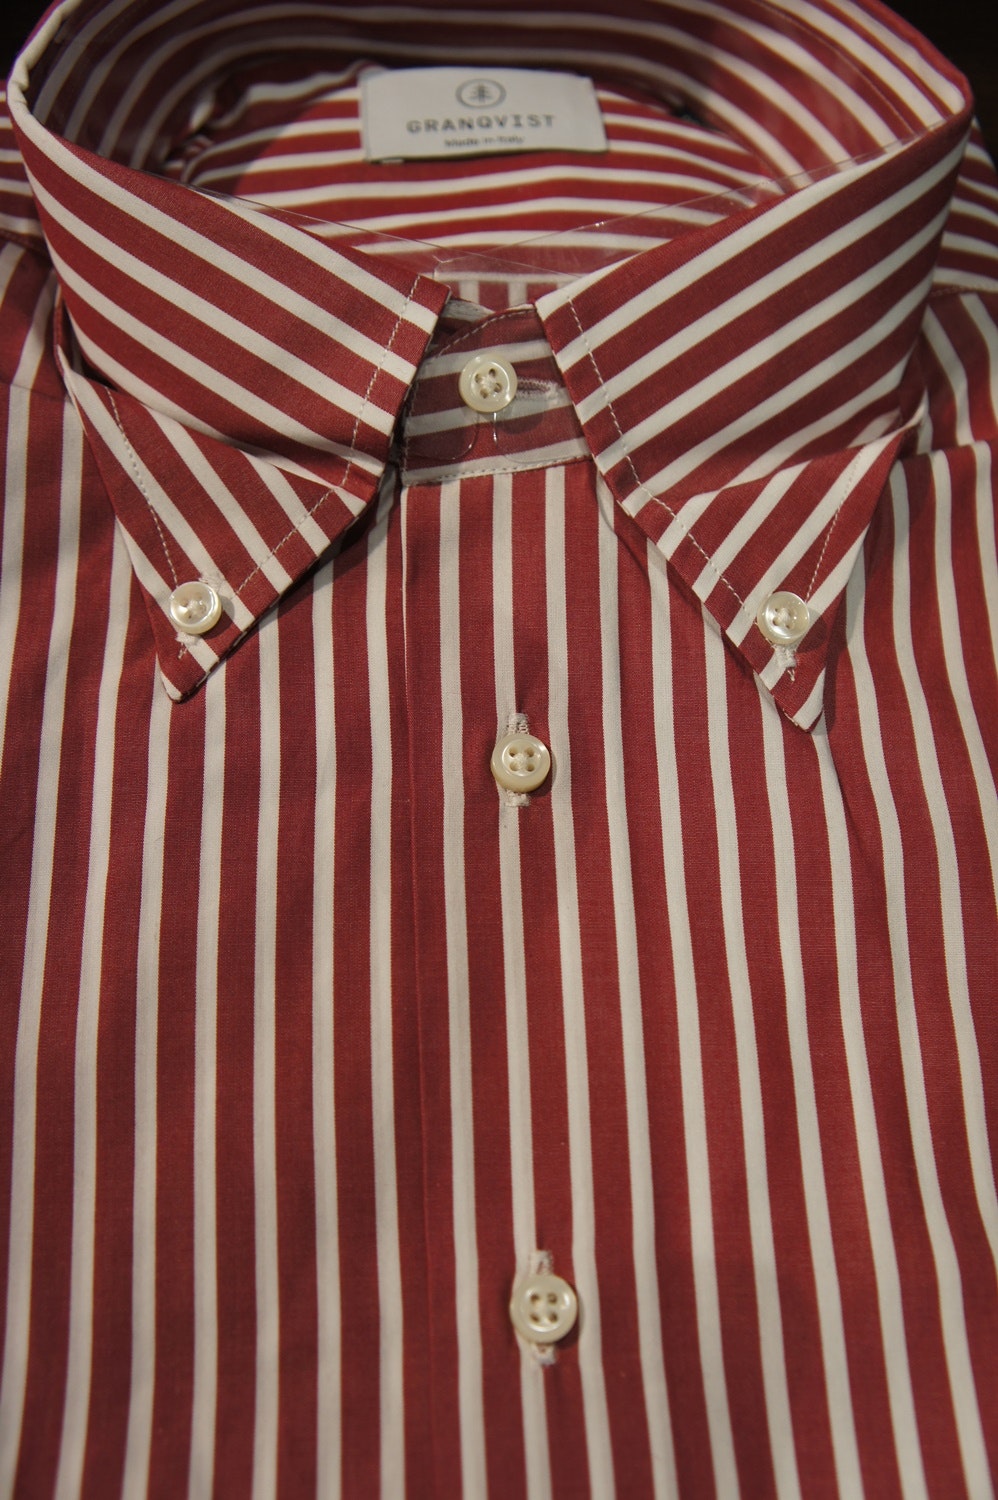 Striped Poplin Shirt - Burgundy/White